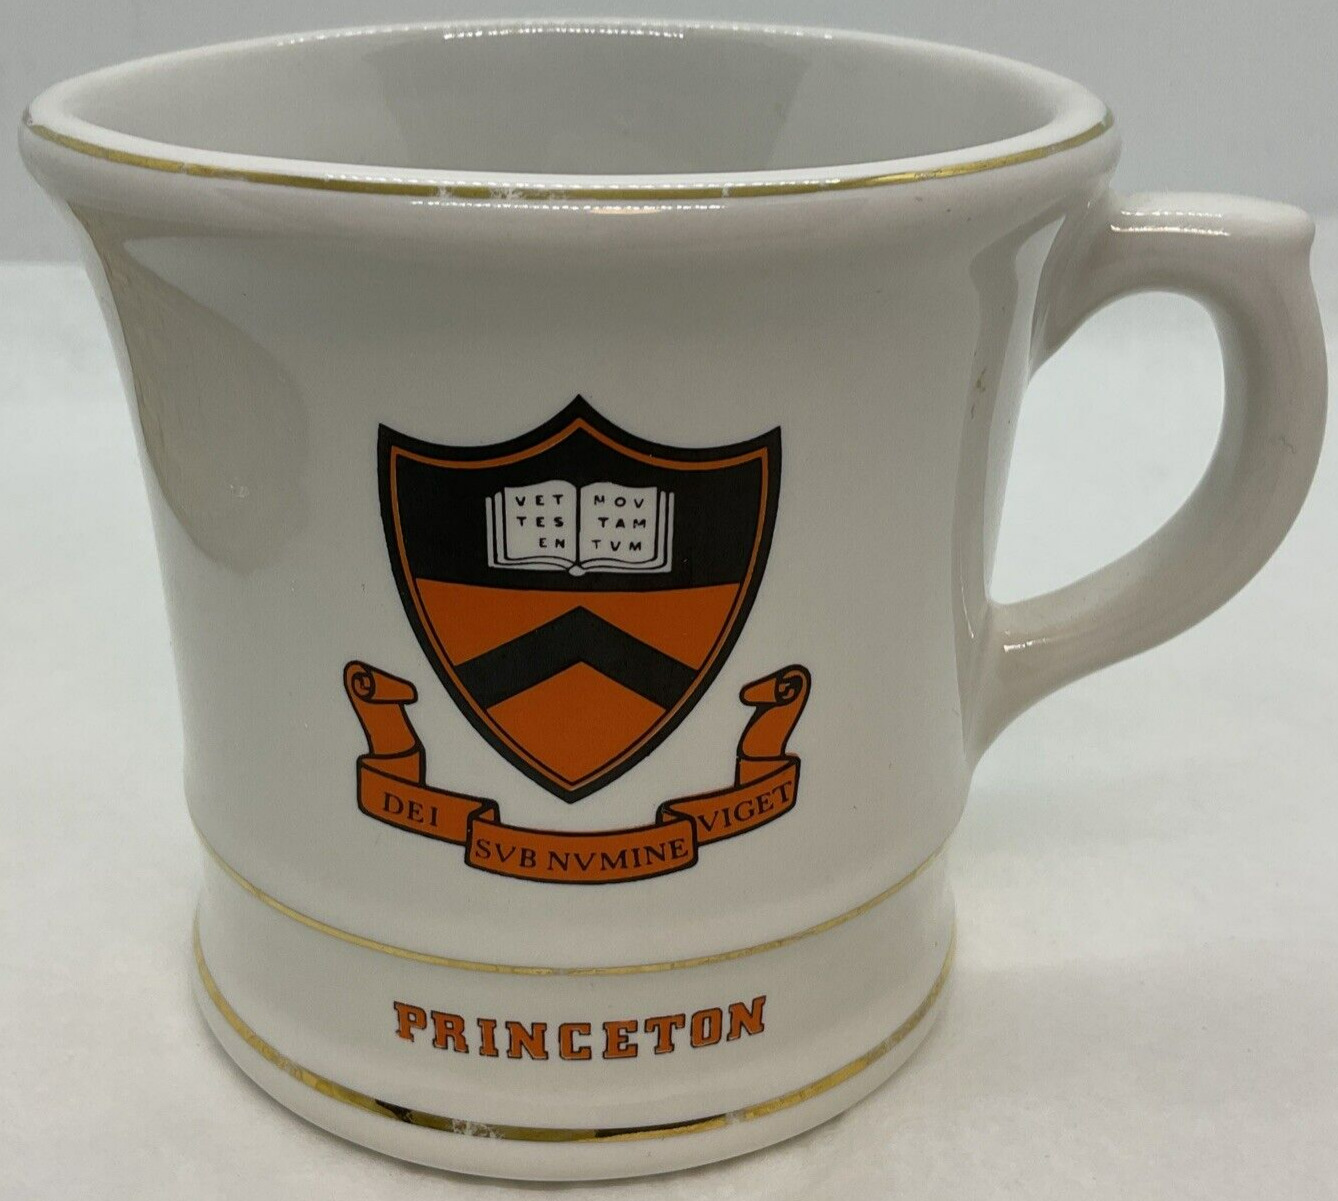 Vintage Princeton Mug DEI SVB NVMINE VIGET Shaving Mug Cup Razor Man Will of God